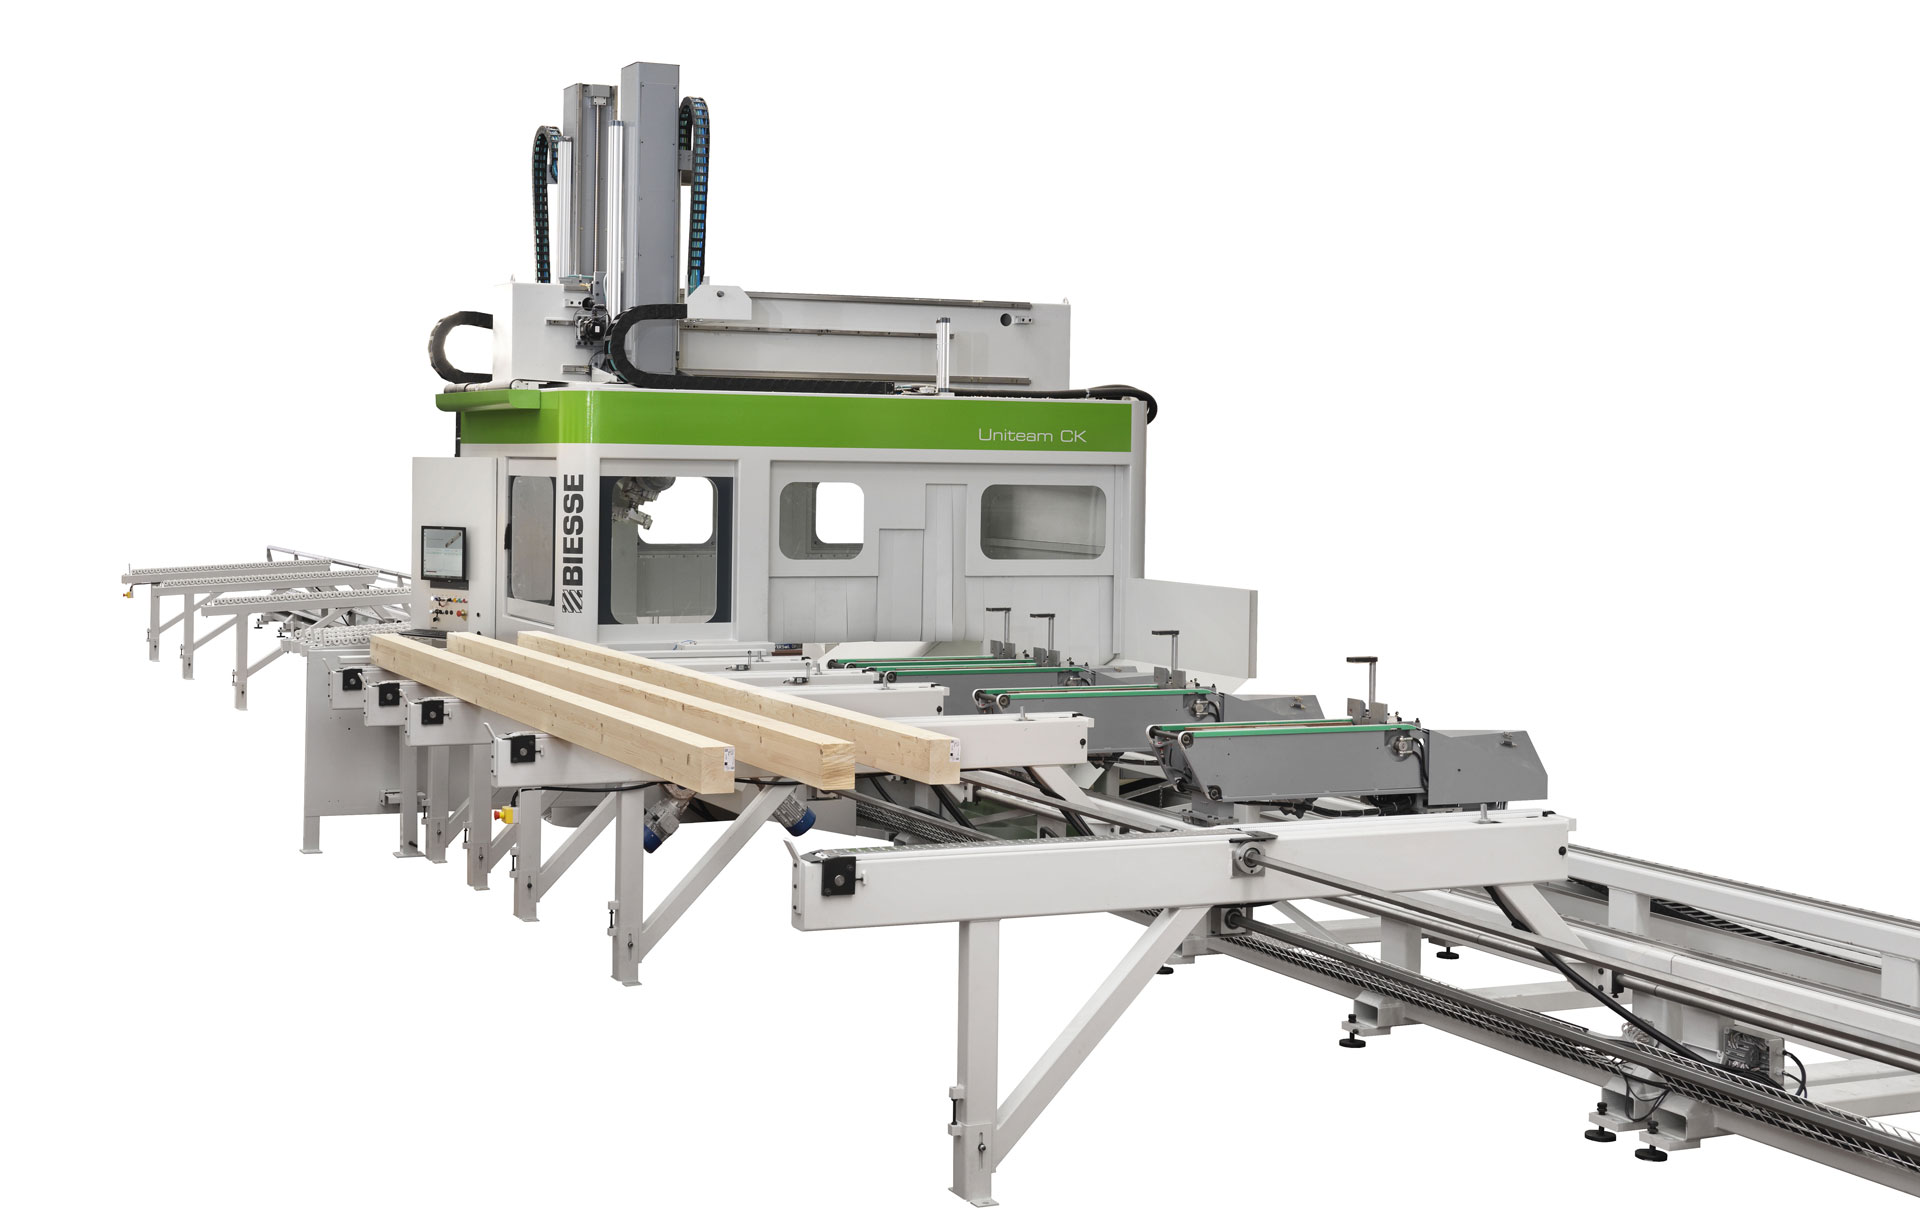 CNC machines for timber construction UNITEAM CK: Photo 2